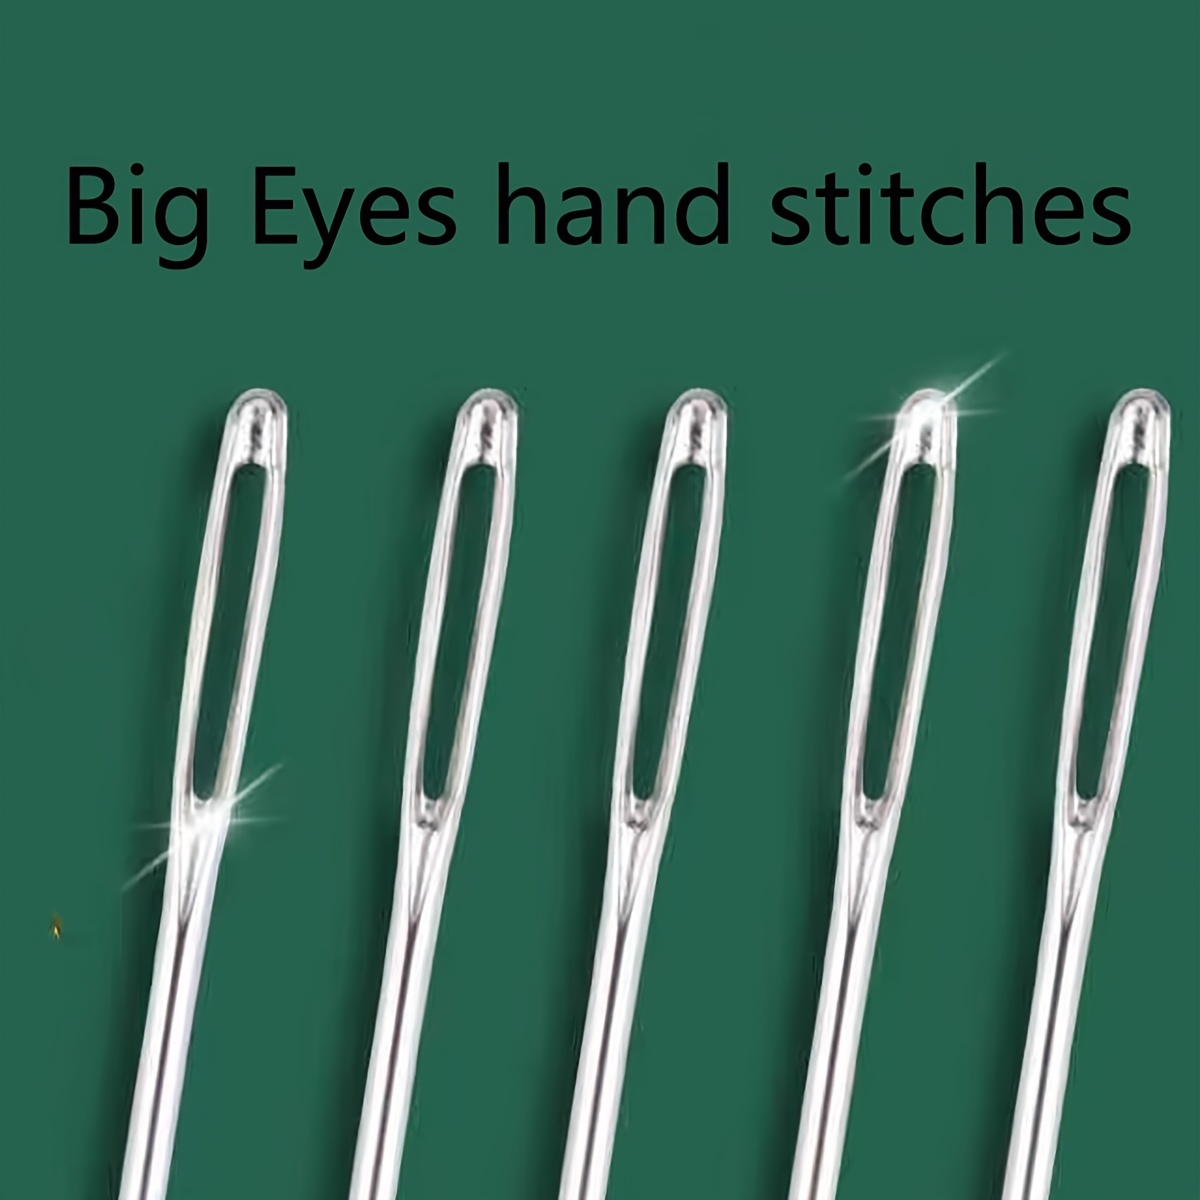  Redamancy 25 Large Eye Needles-Large Eye Needles for Hand  Sewing,Sewing Needles, 5 Sizes Big Eye Embroidery Needles in Aluminum  Storage Tube, 1 Seam Rippers, 2 Thimble, 2 Needle Threaders